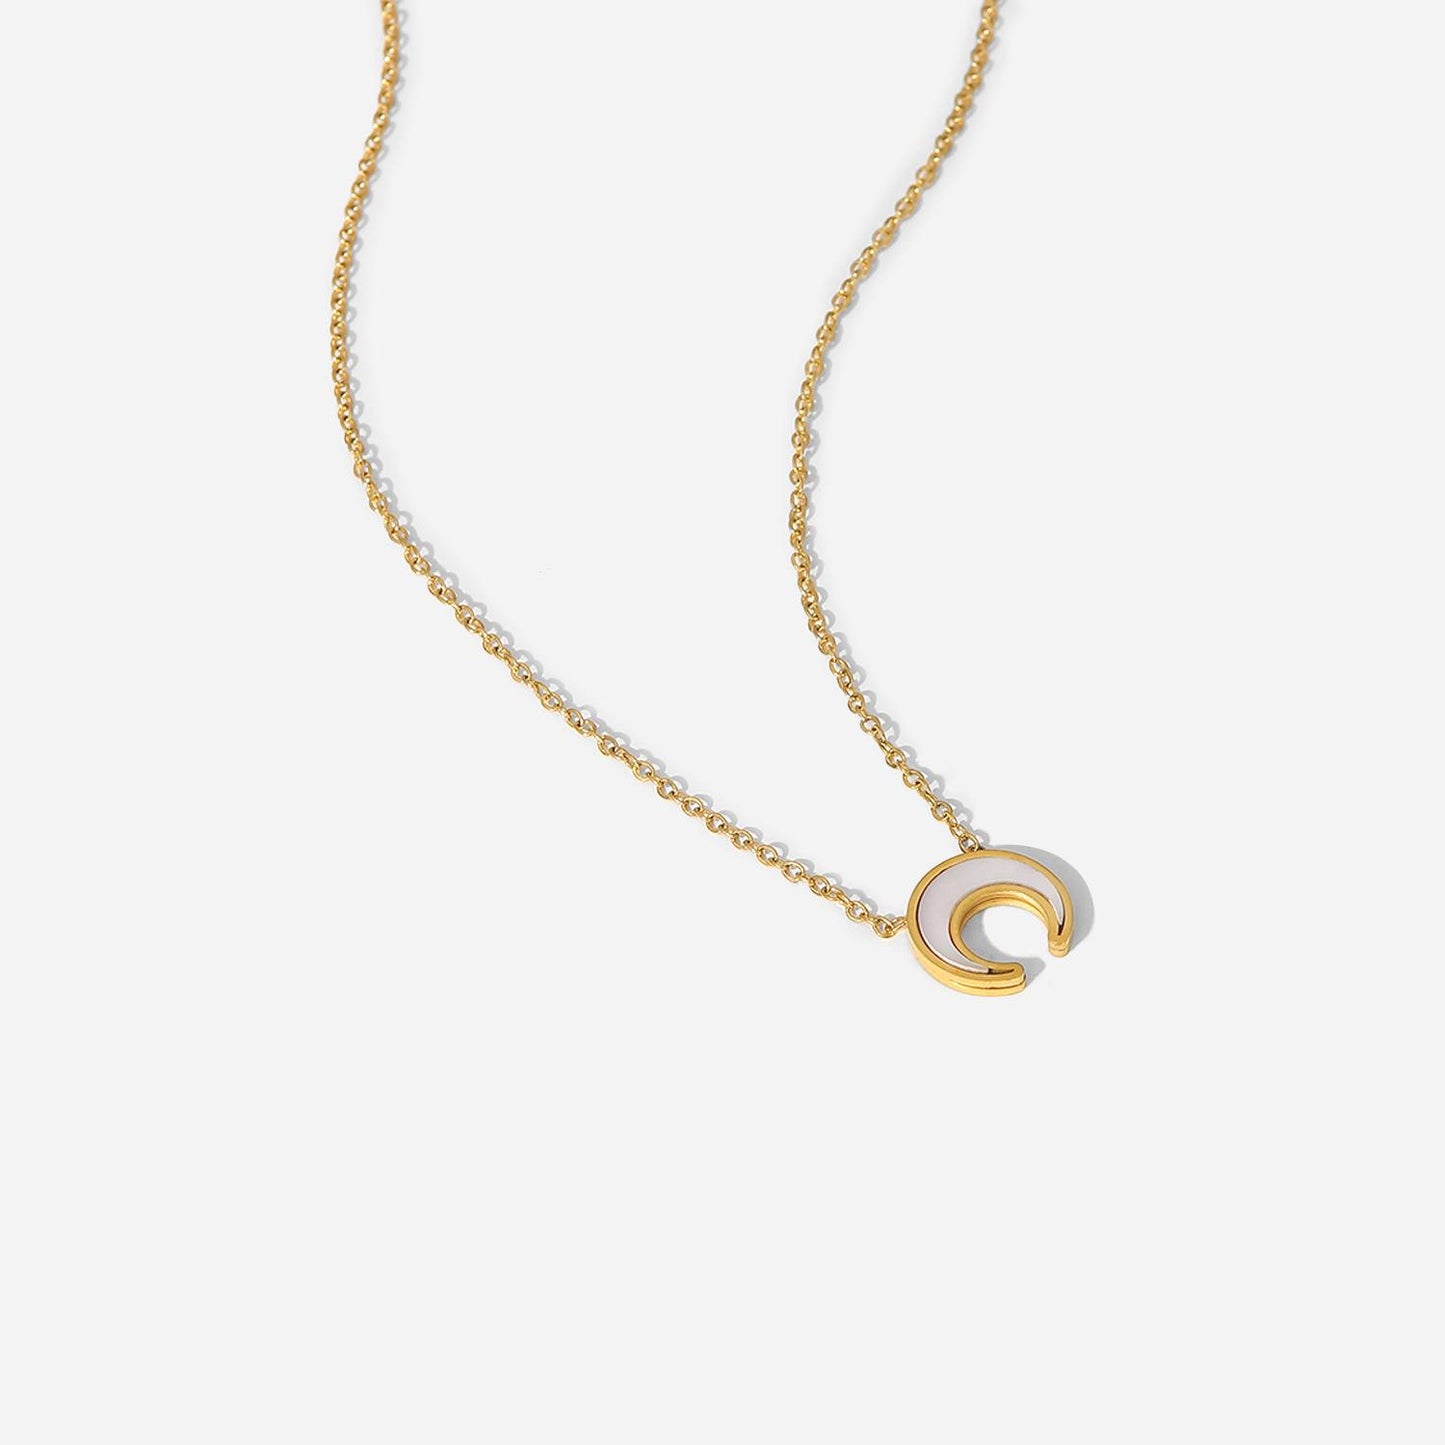 Non-fading crescent shape pendant necklace